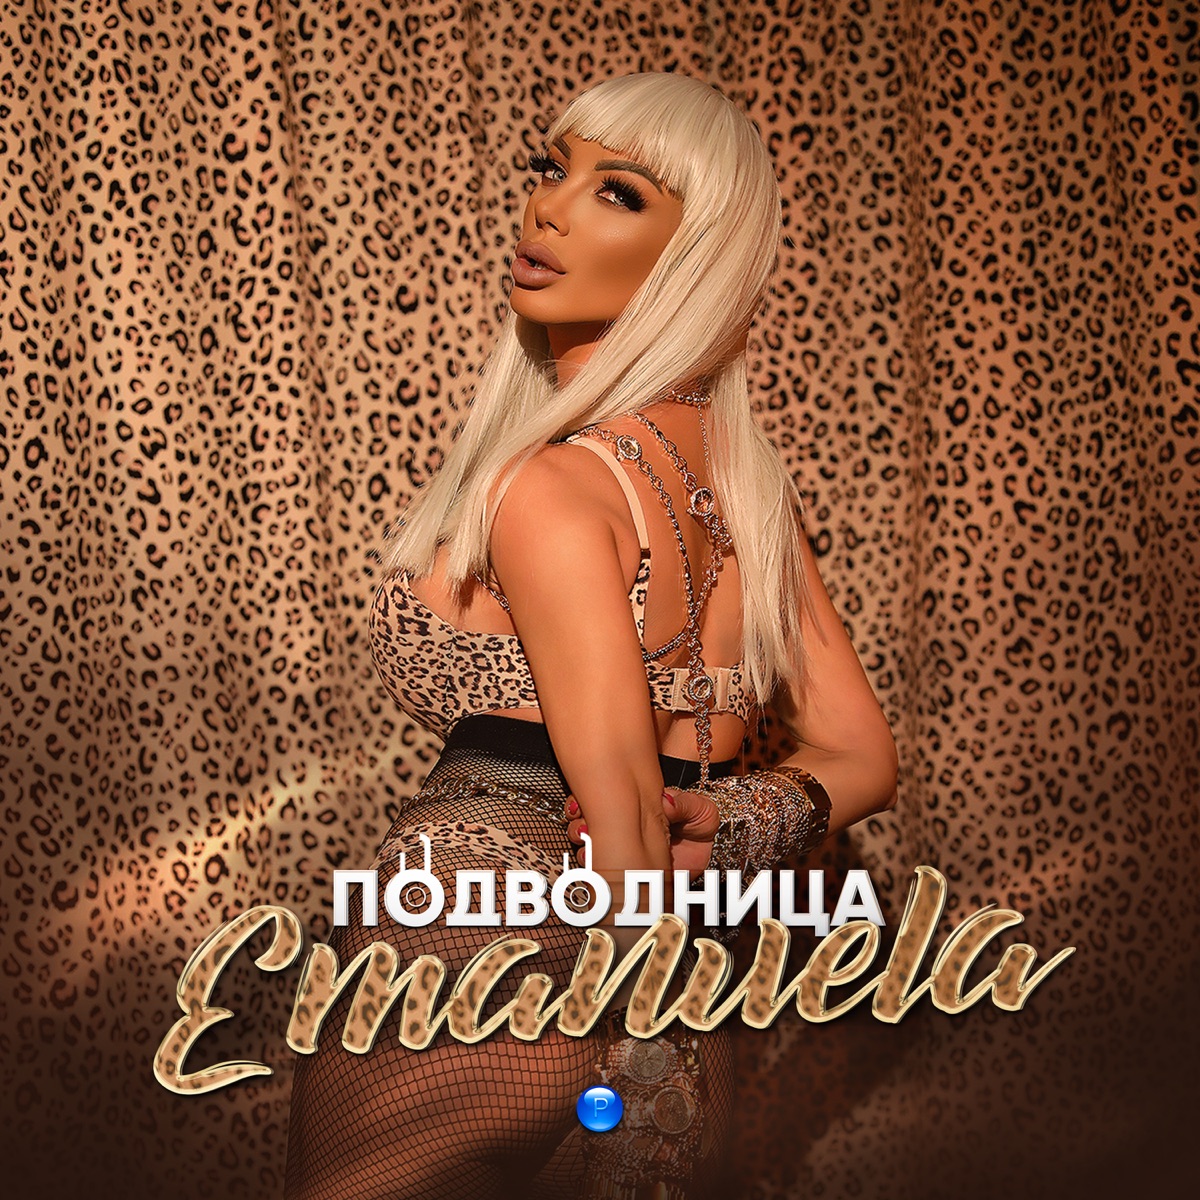 В чуждите легла - Single - Album by Emanuela - Apple Music